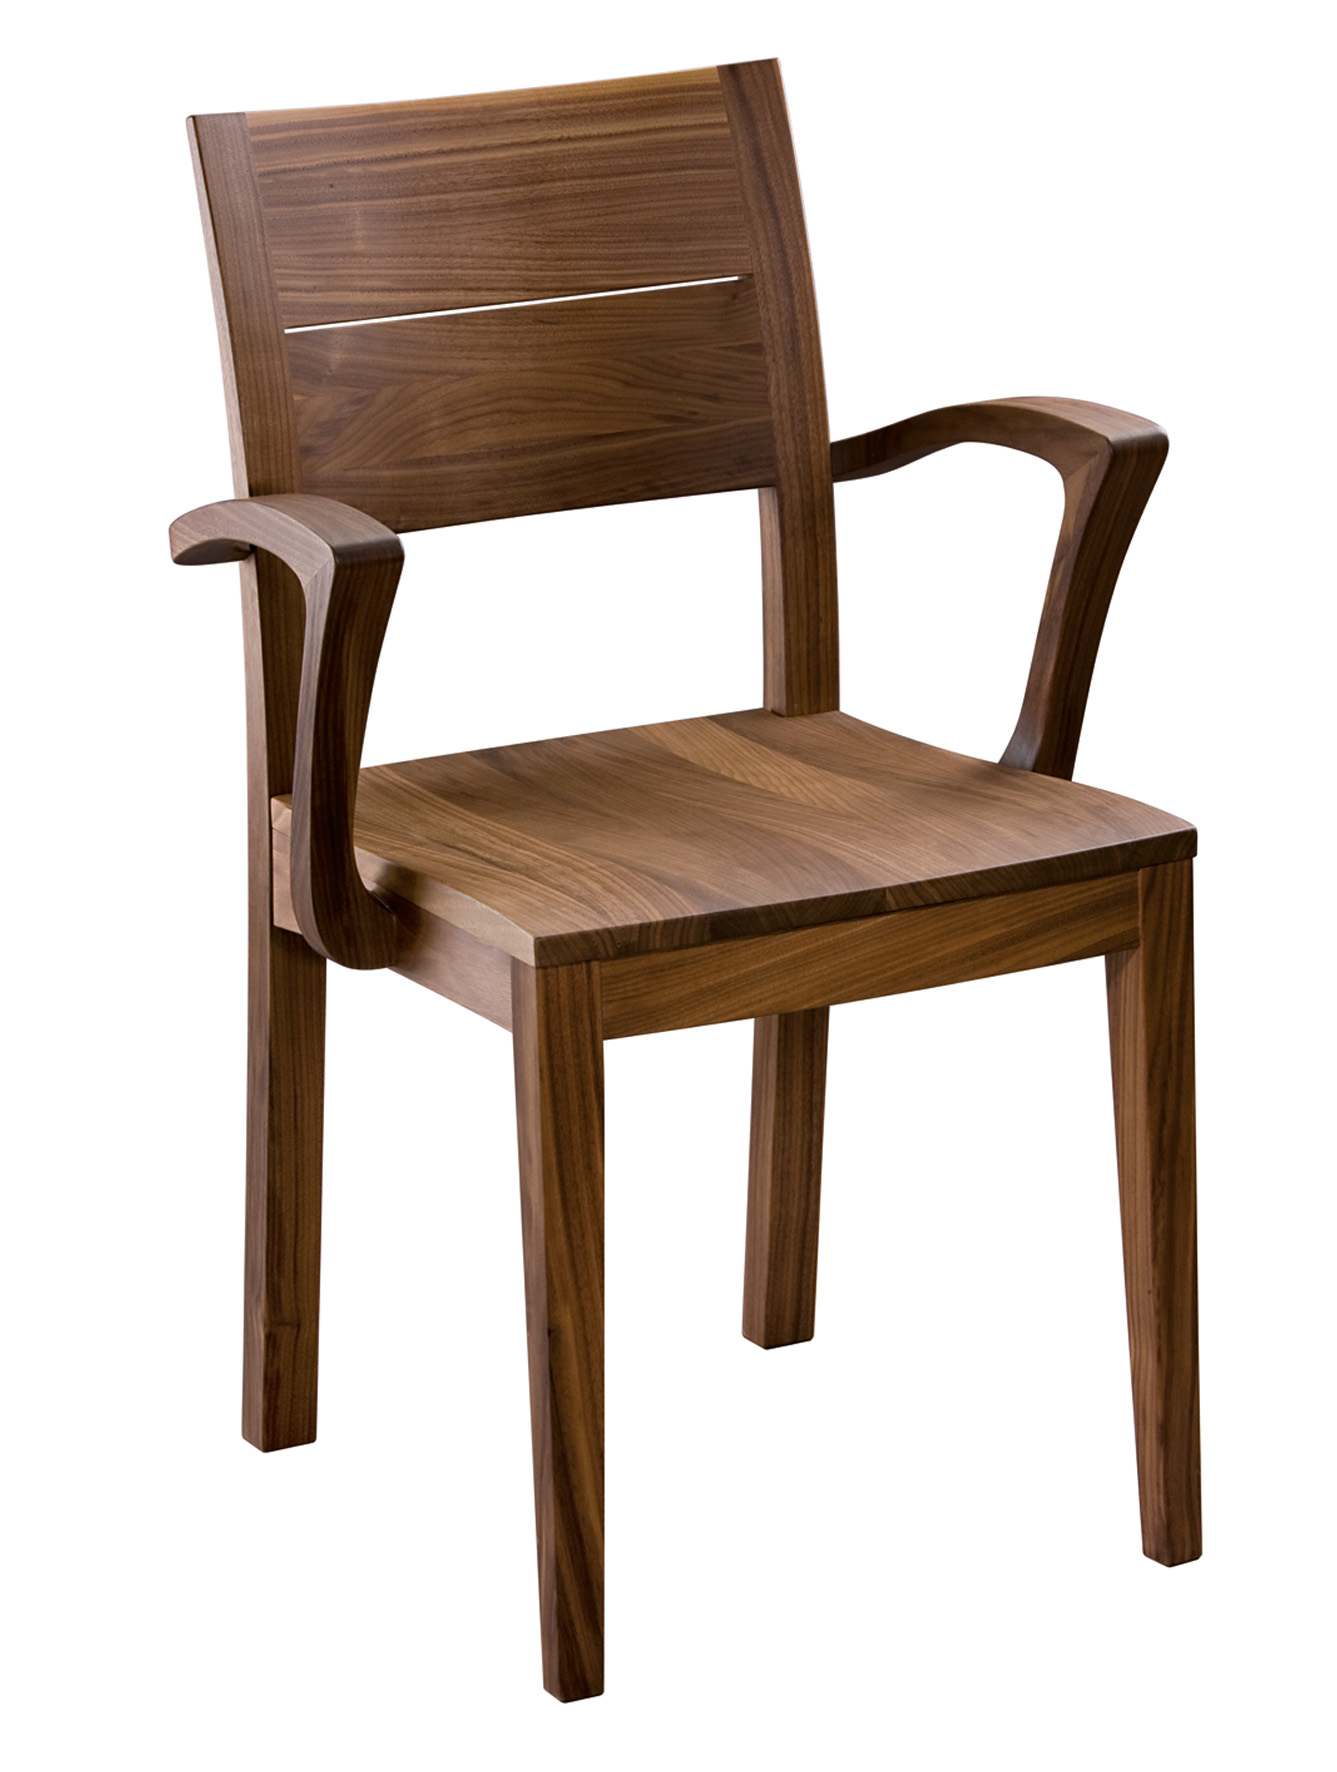 CARESSE CLASSIC Armlehnstuhl mit körpergerecht ausgeformtem Holzsitz